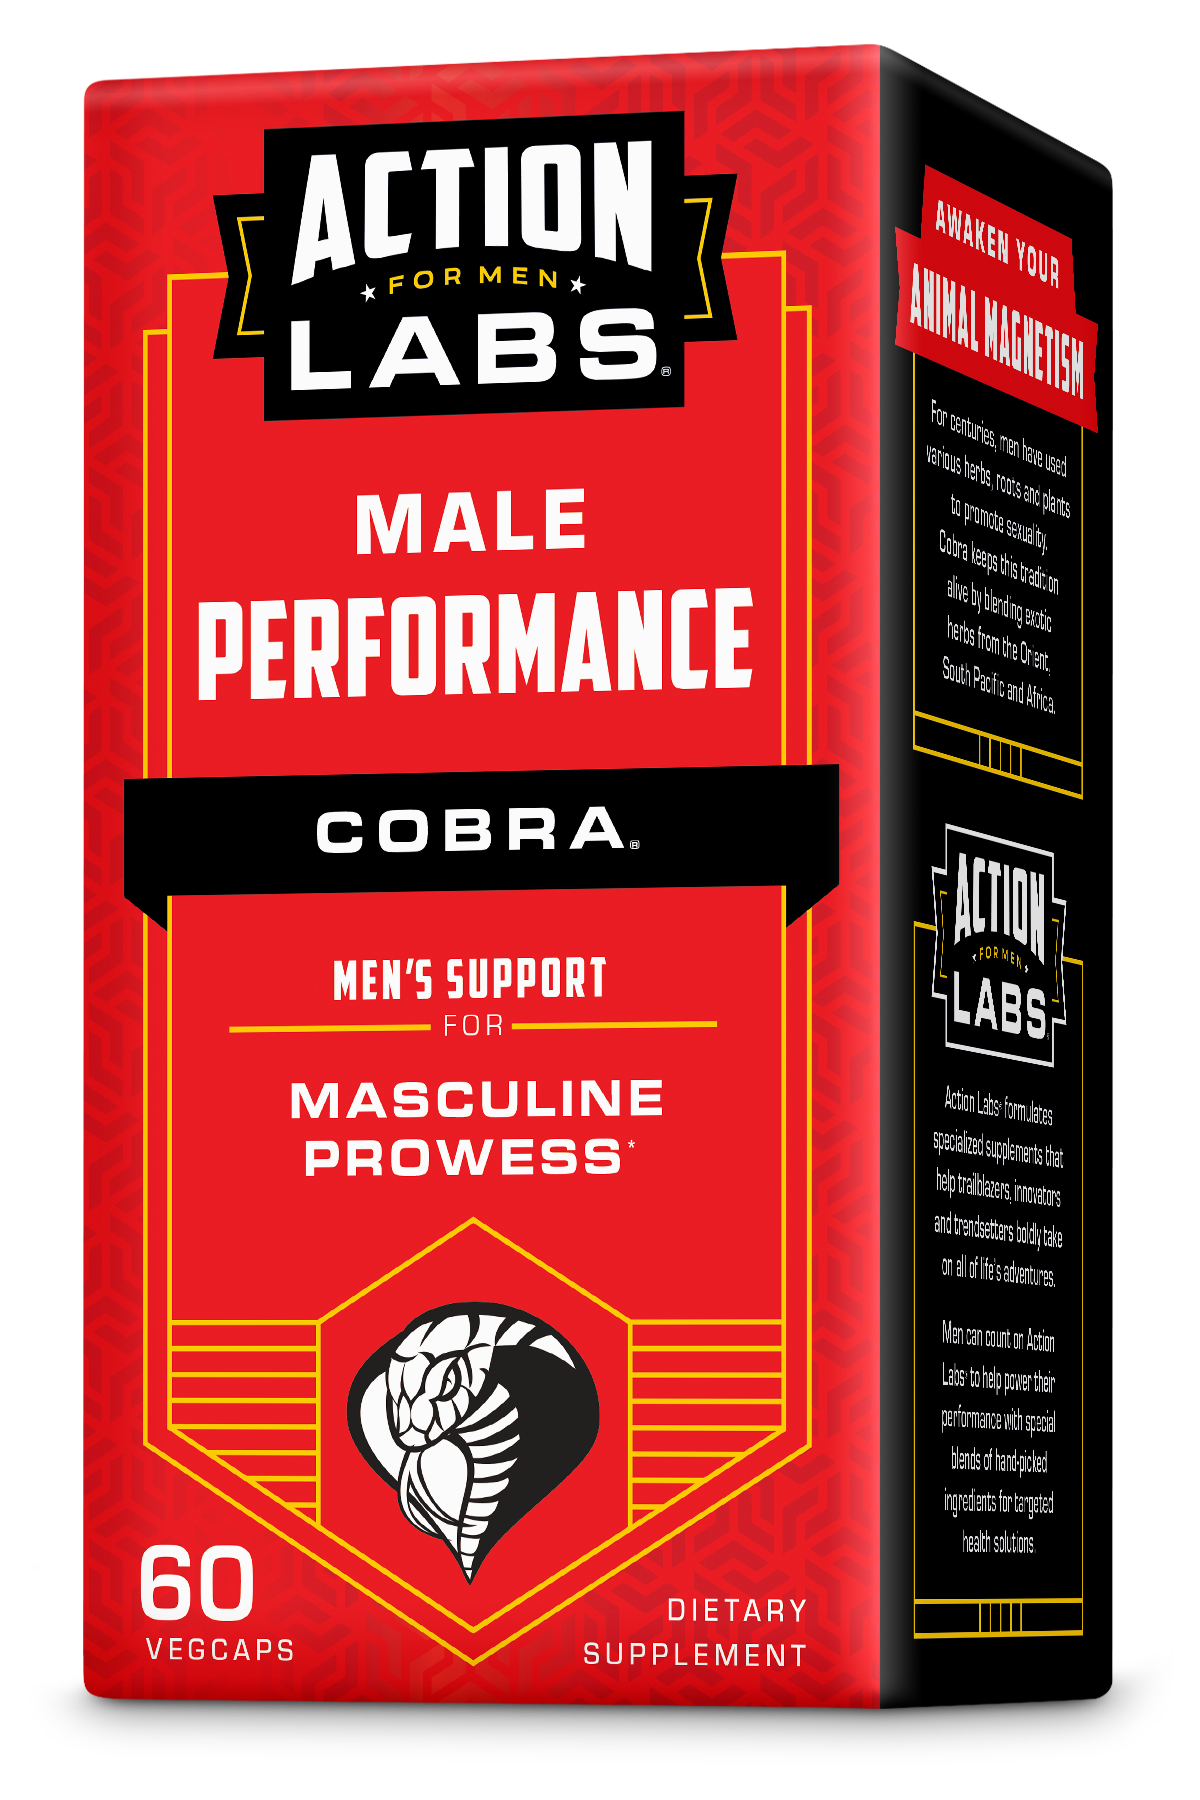 Cobra | Male Performance